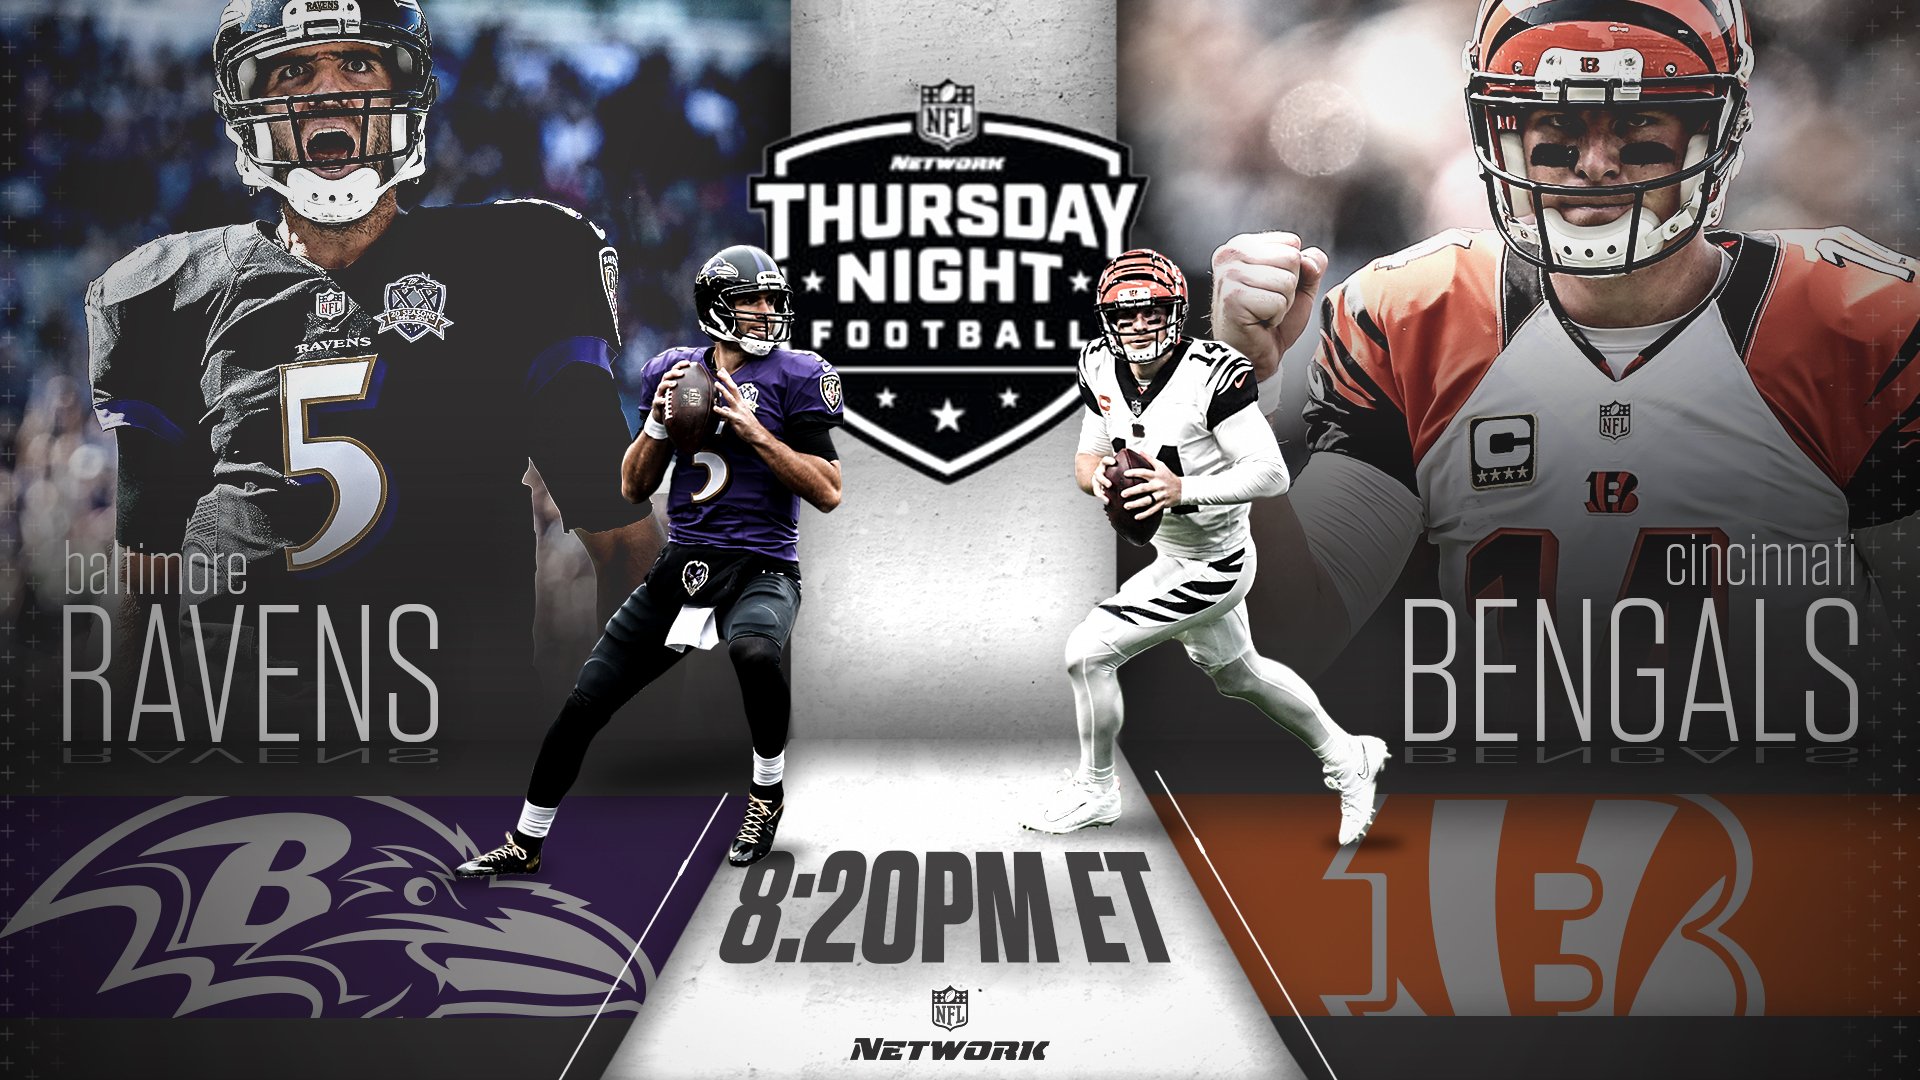 NFL - Baltimore Ravens vs. Cincinnati Bengals. Thursday Night Football! 